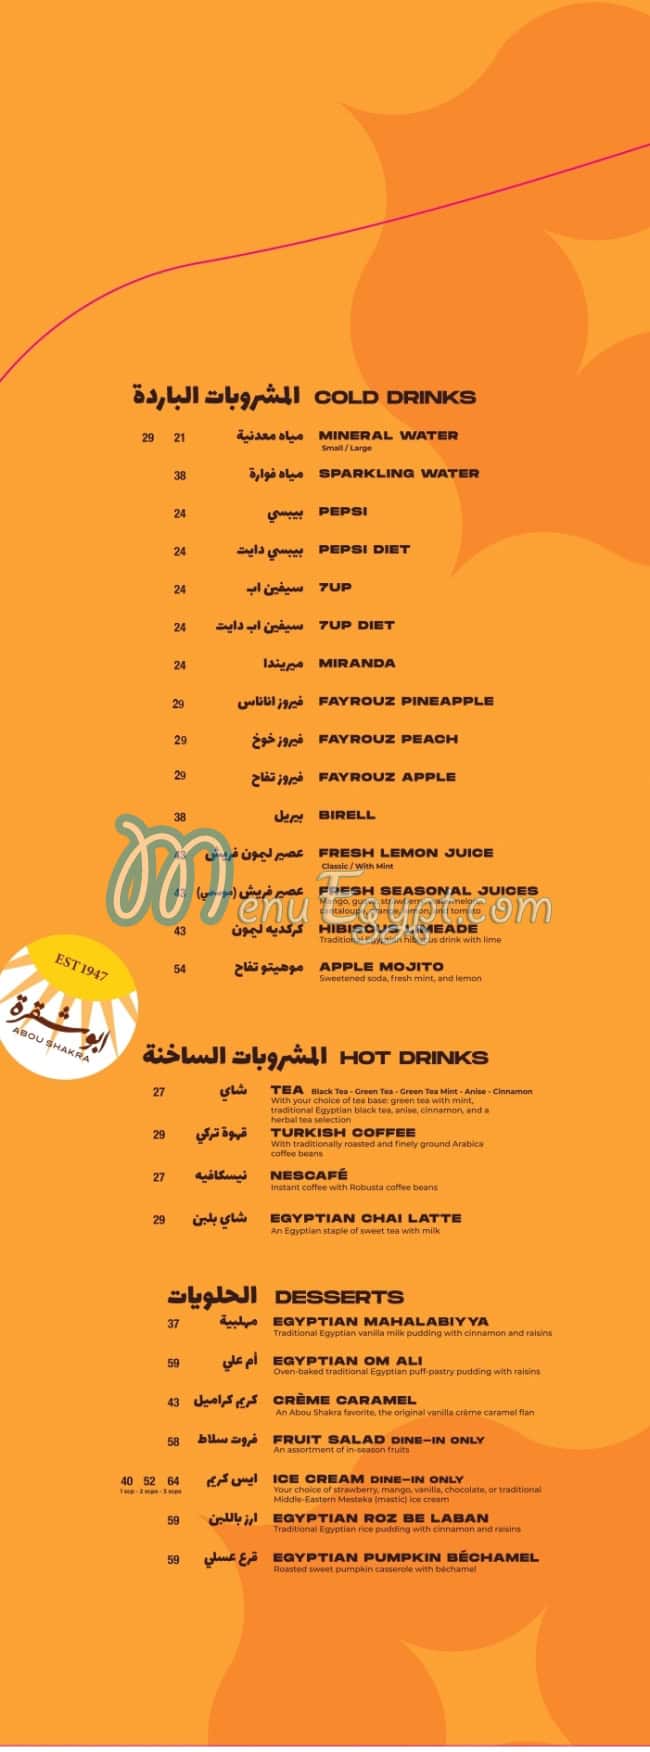 Abou Shakra delivery menu